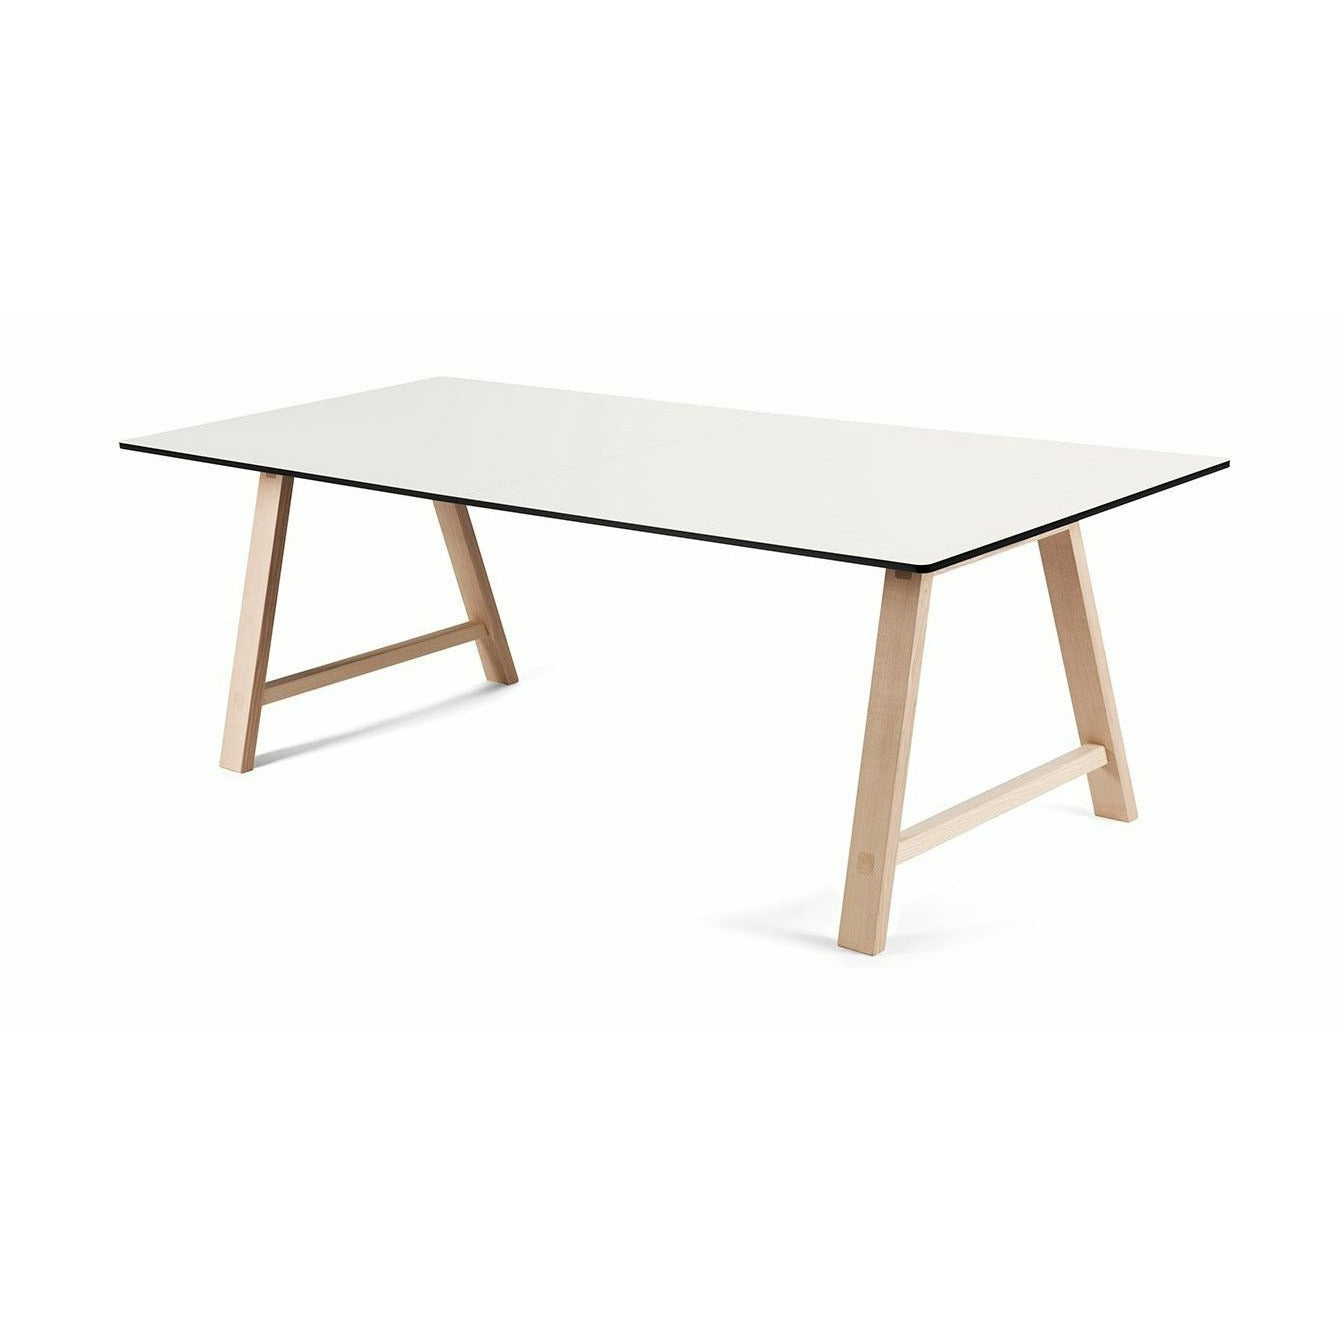 Andersen Furniture T1 utdragbart bord, vitt laminat, tvålad ek, 220 cm